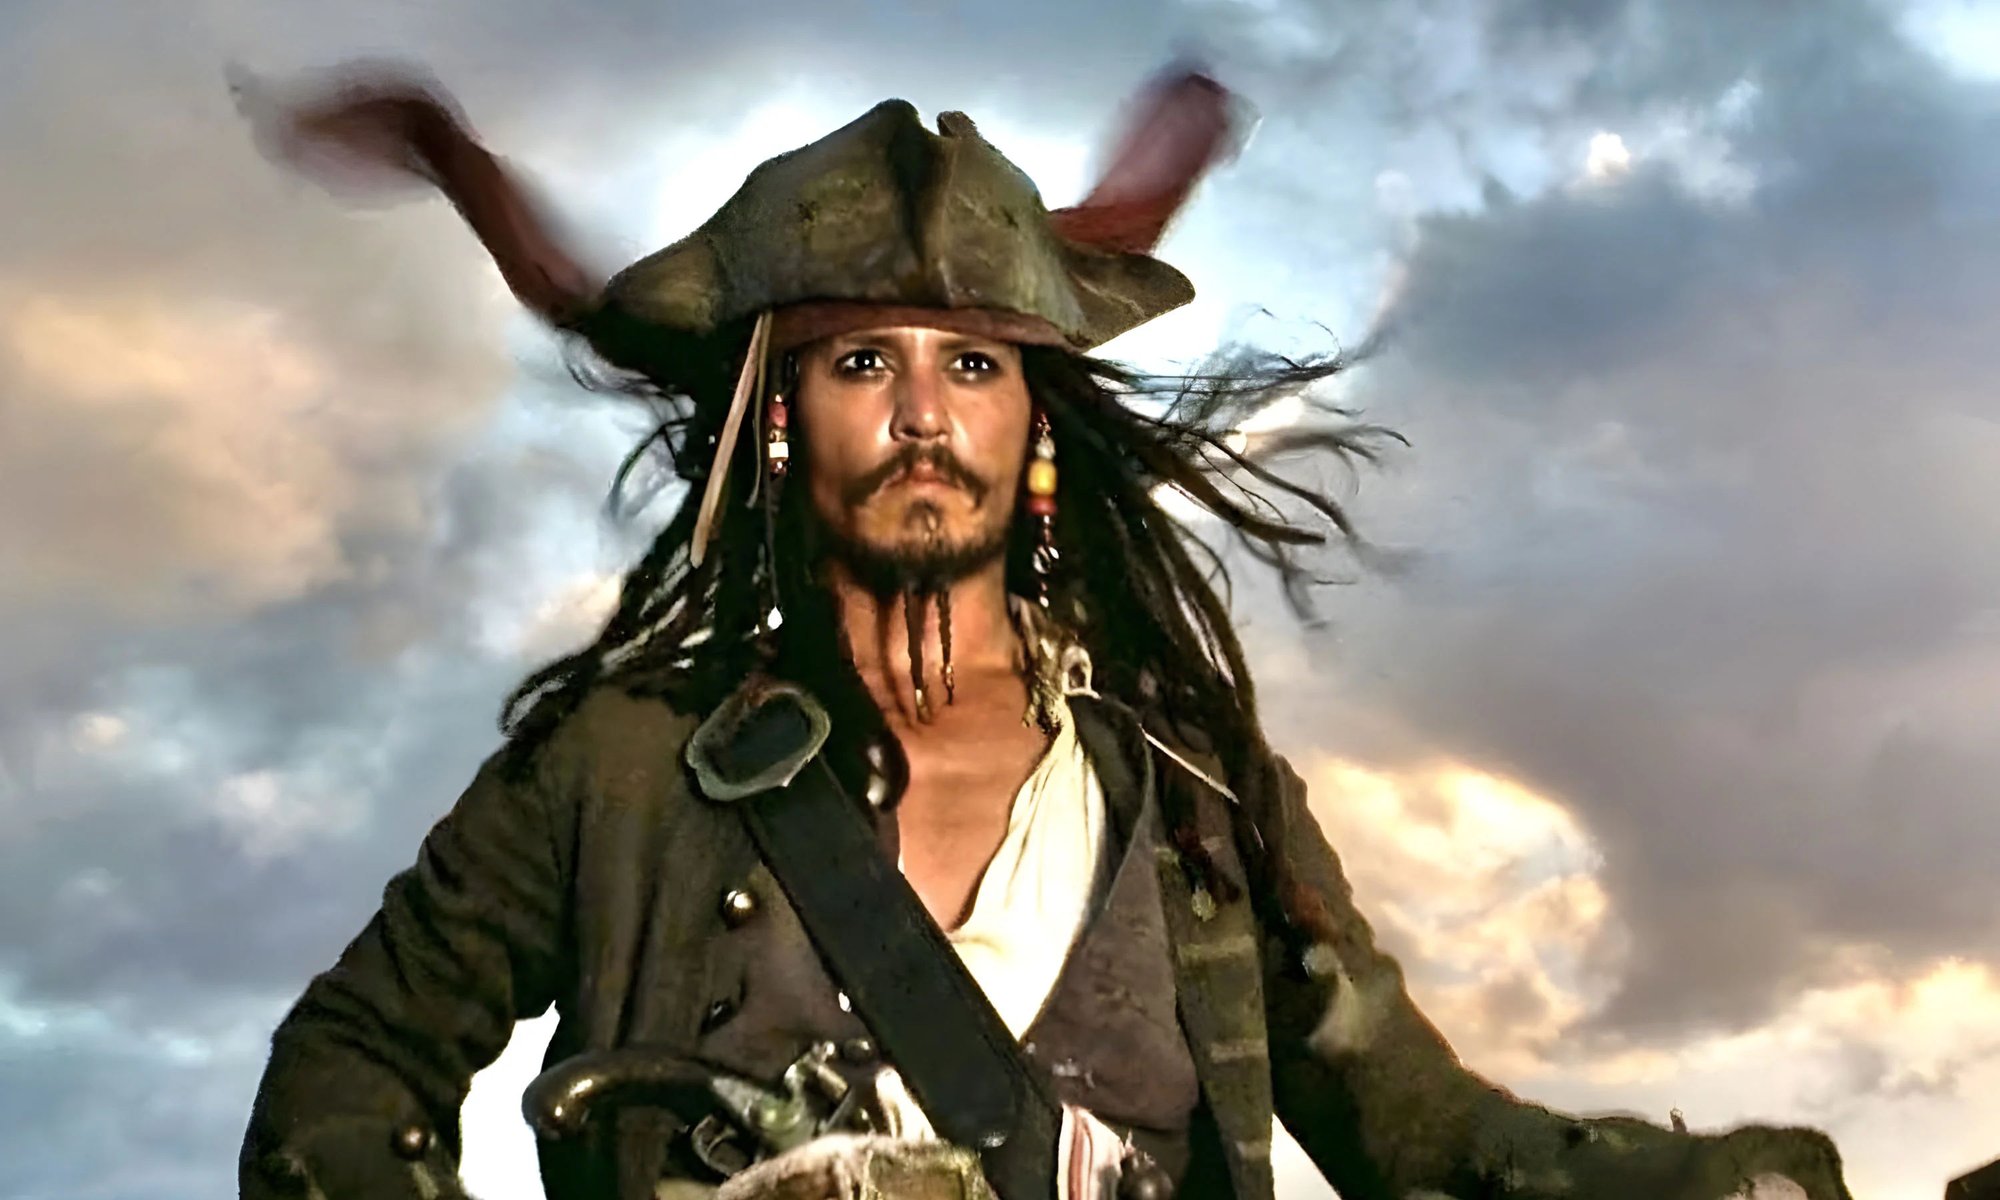 Jack Sparrow (Pirates of the Caribbean)